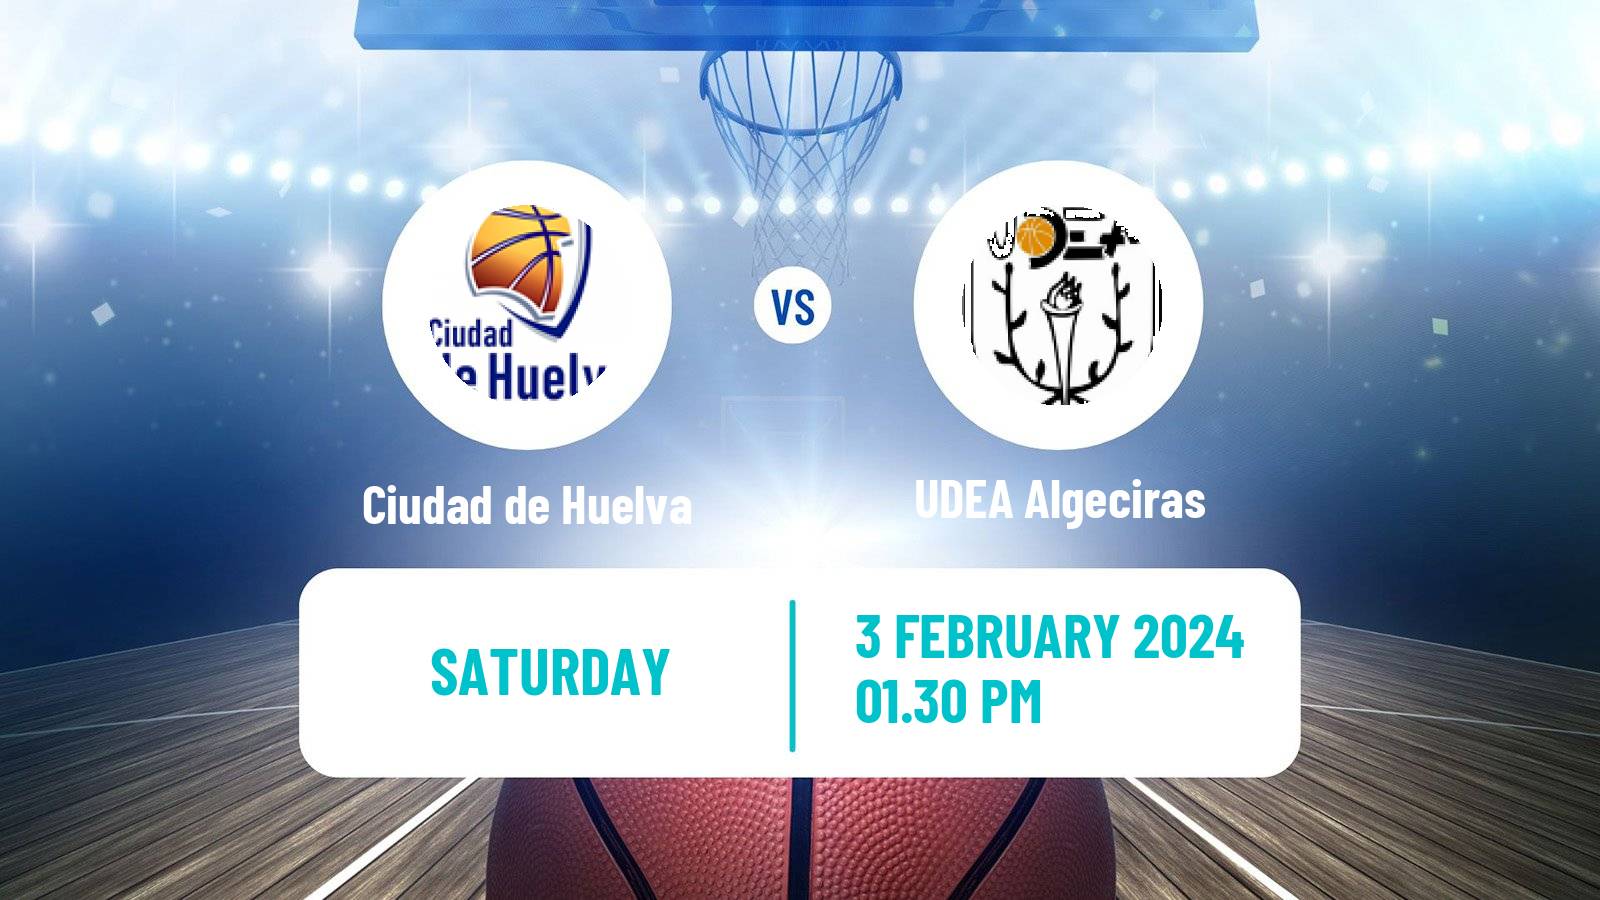 Basketball Spanish LEB Plata Ciudad de Huelva - UDEA Algeciras